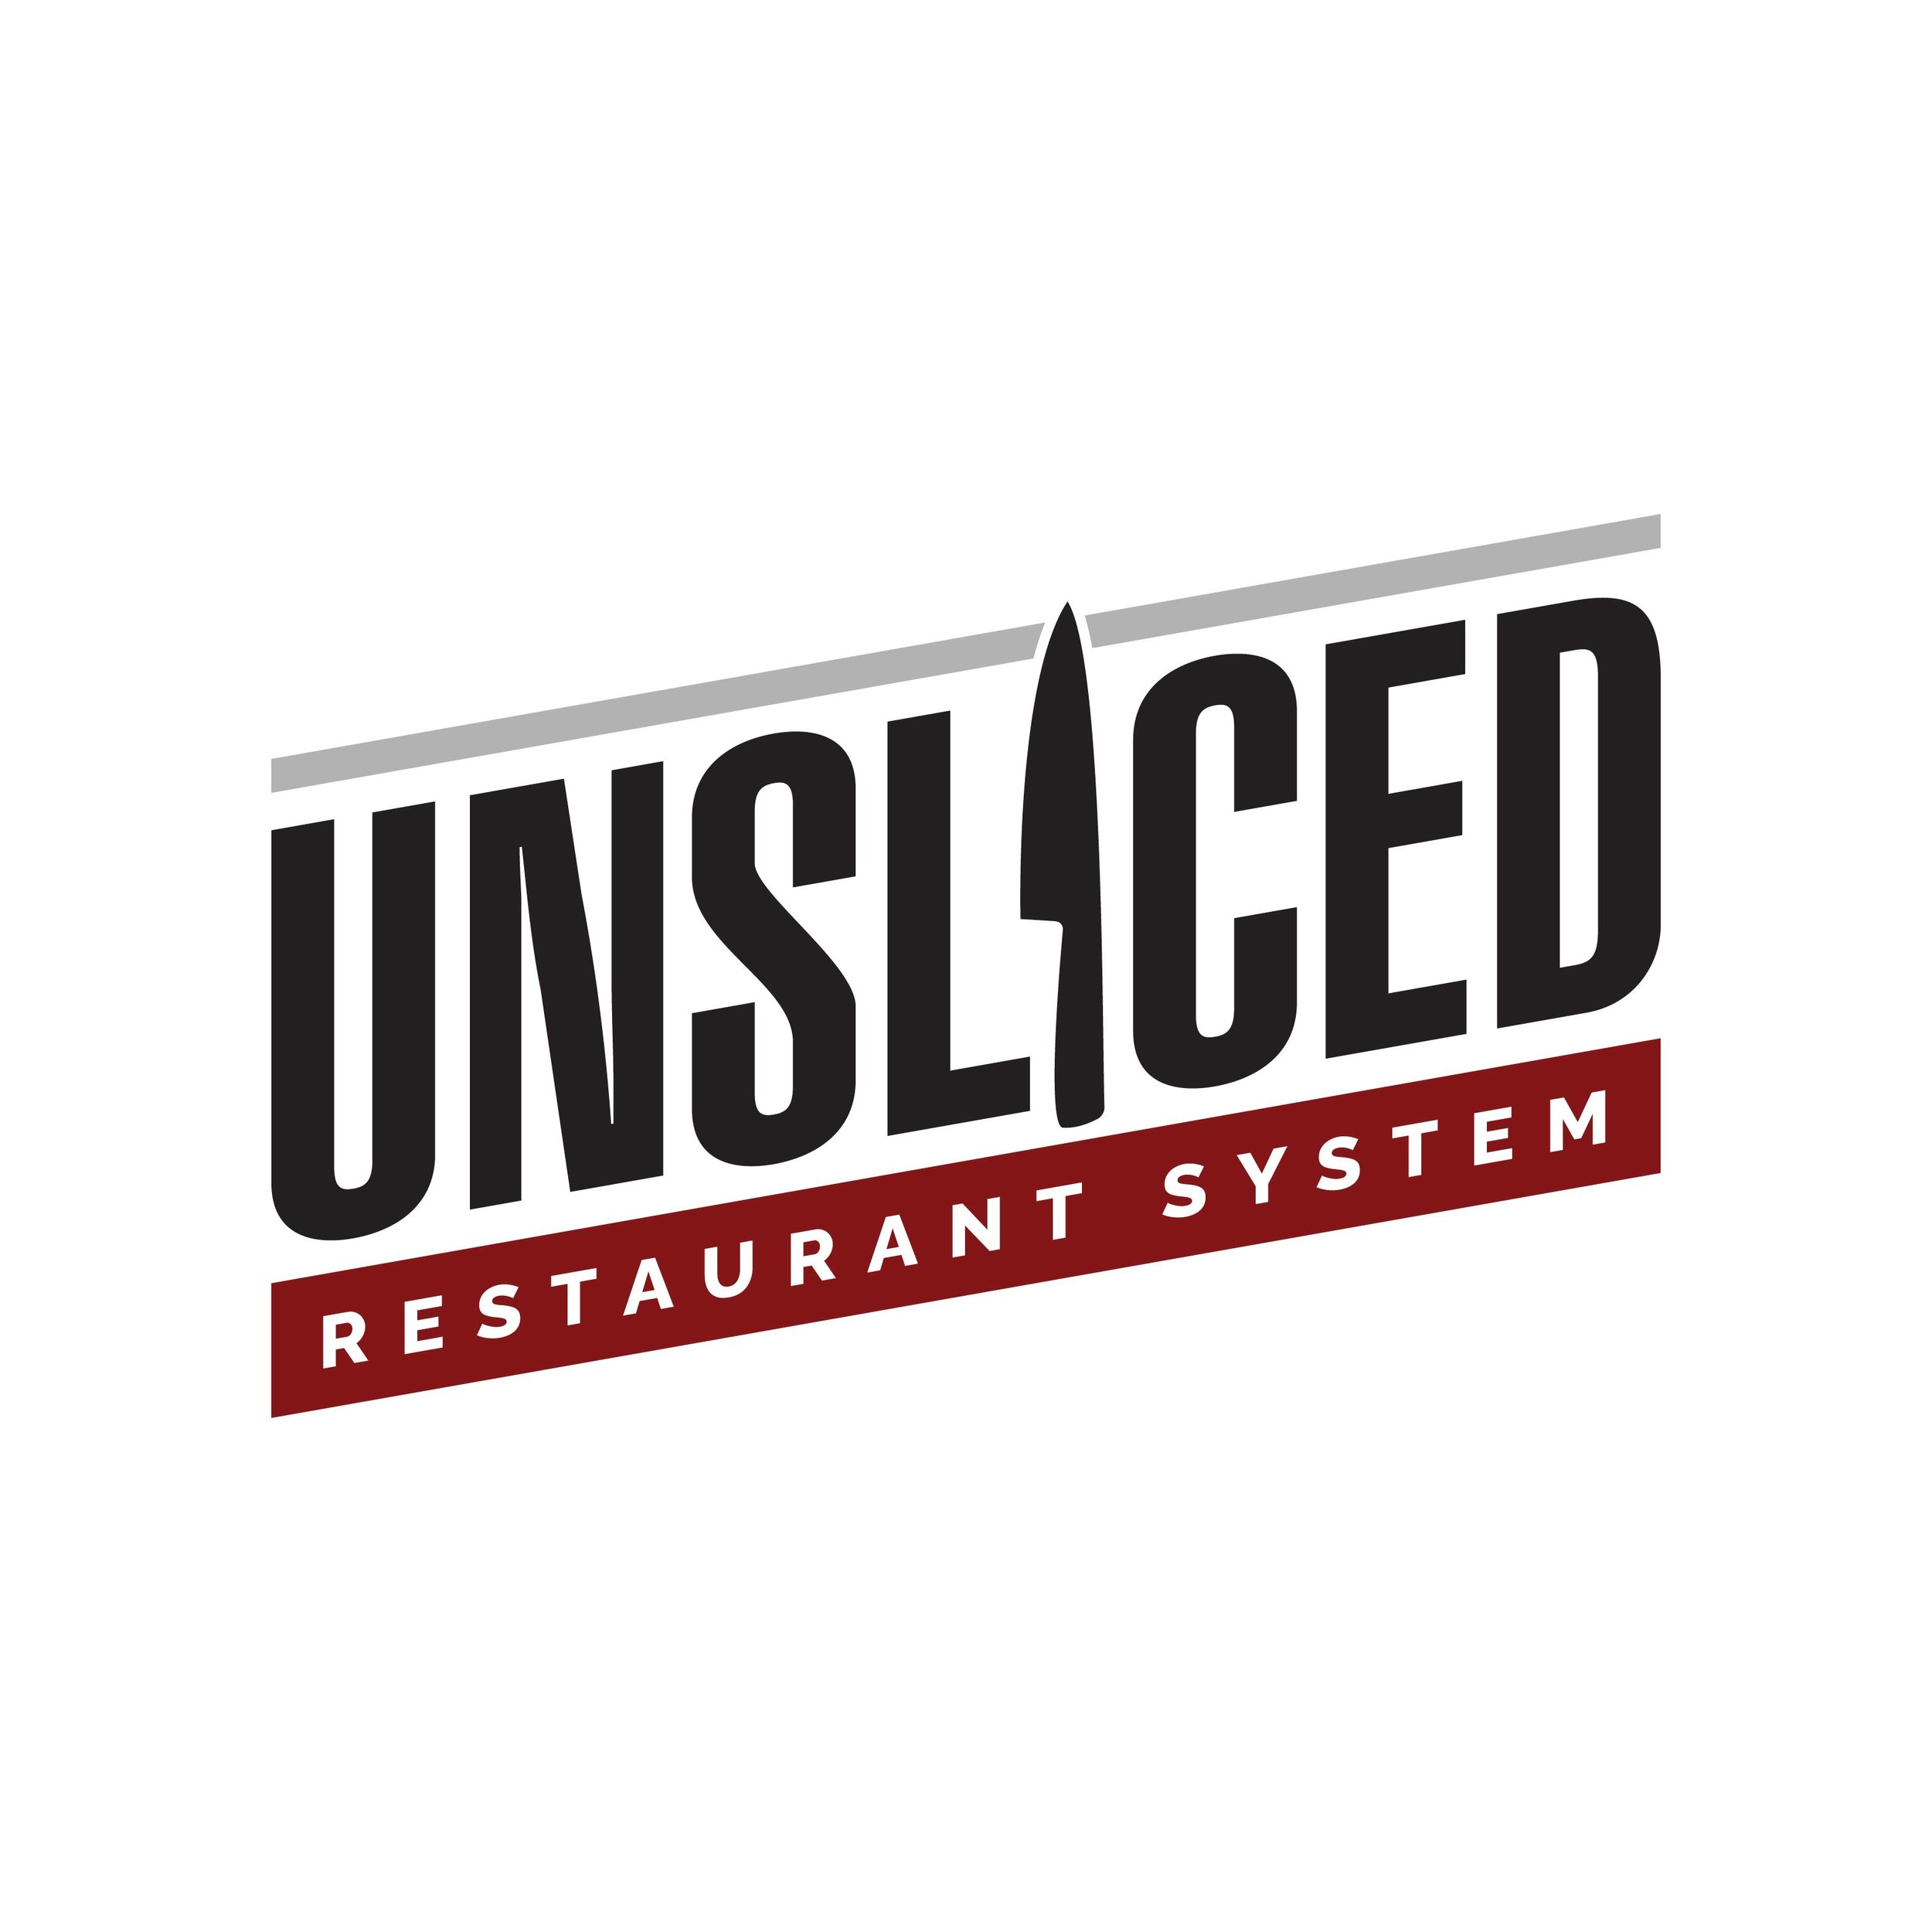 Unsliced Restaurant System Logo